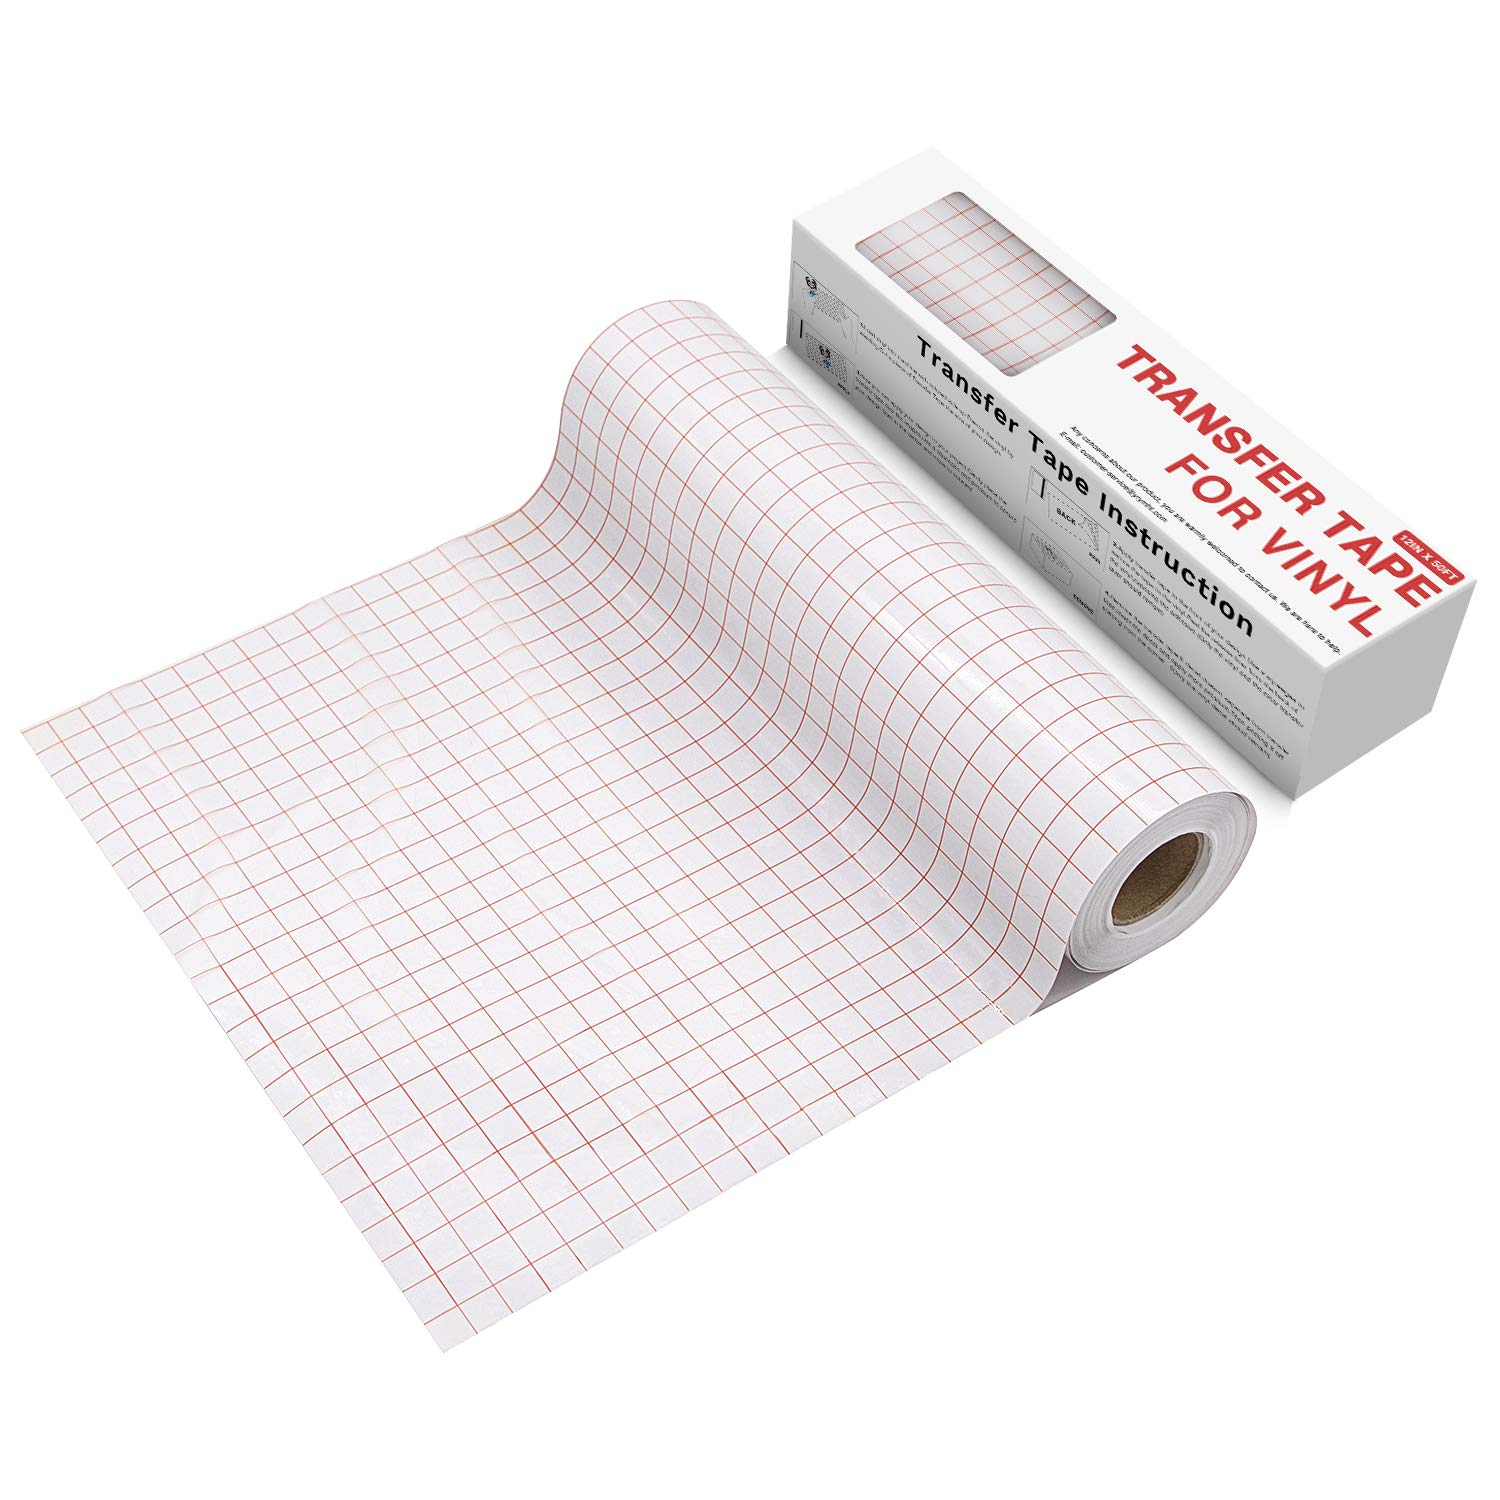 Vinyl Transfer Tape Roll - Craft Application Paper Transfer Paper for  Cricut